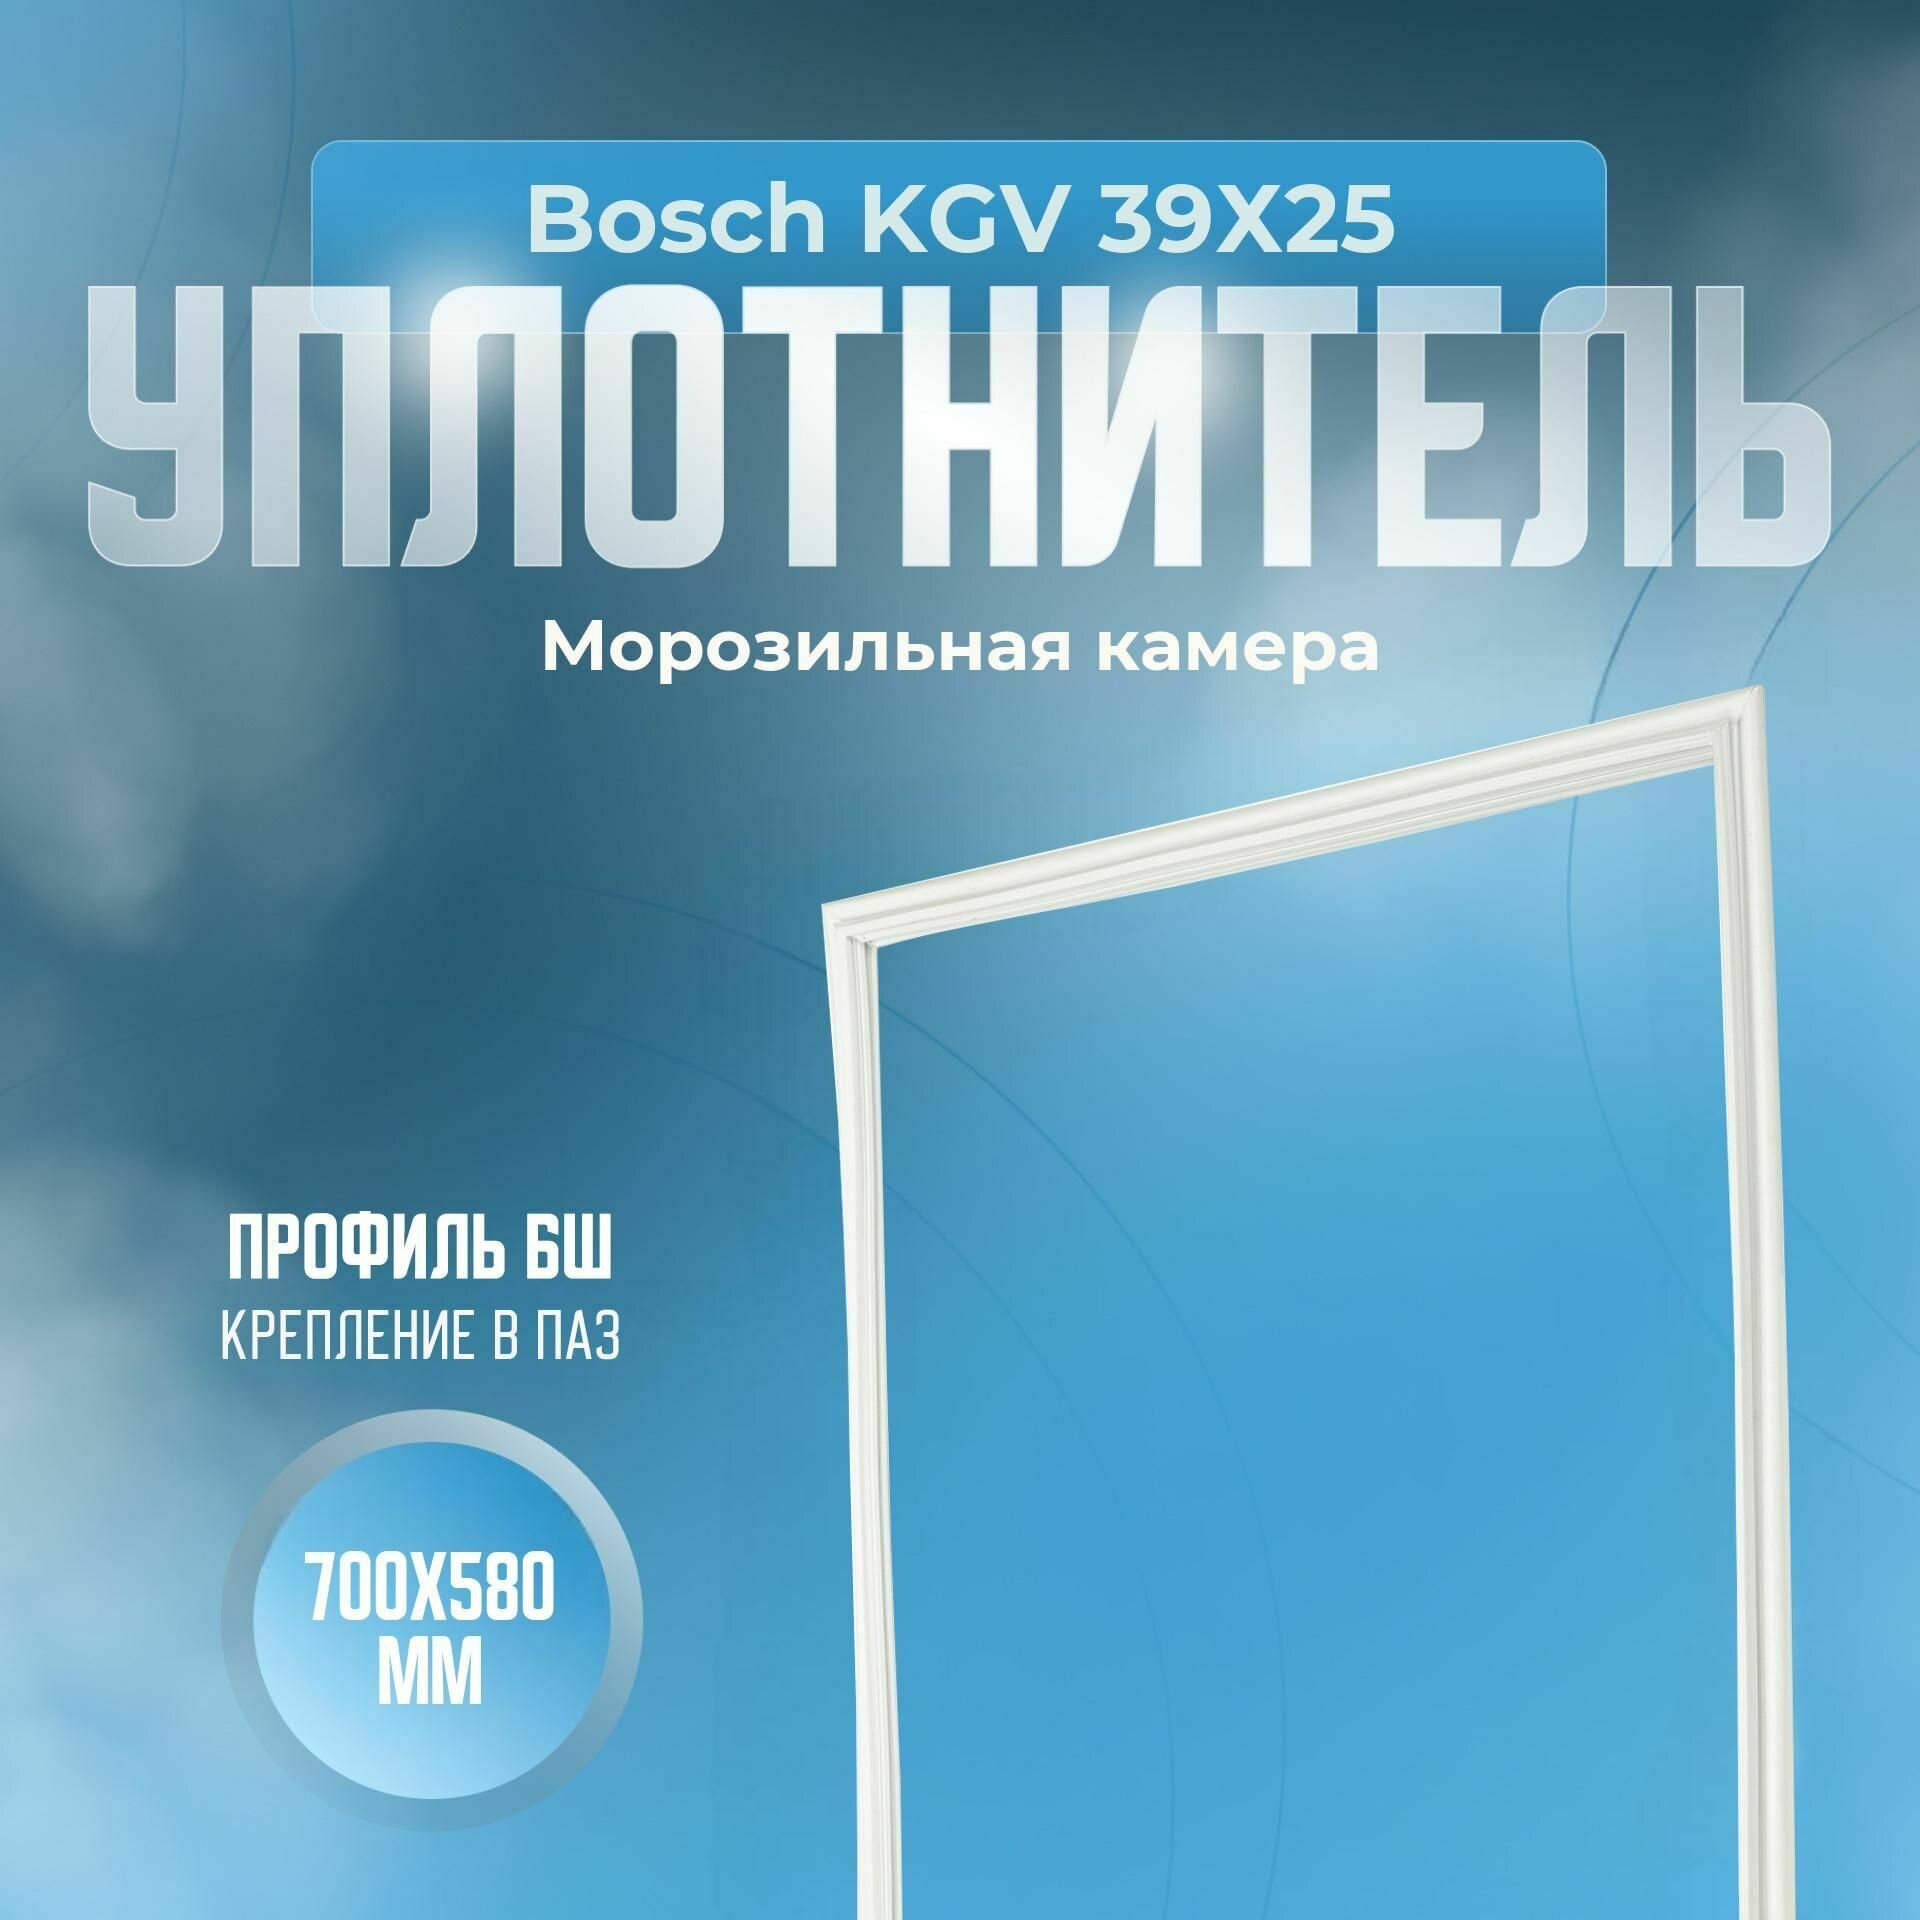 Уплотнитель Bosch KGV 39Х25. м. к, Размер - 700x580 мм. БШ